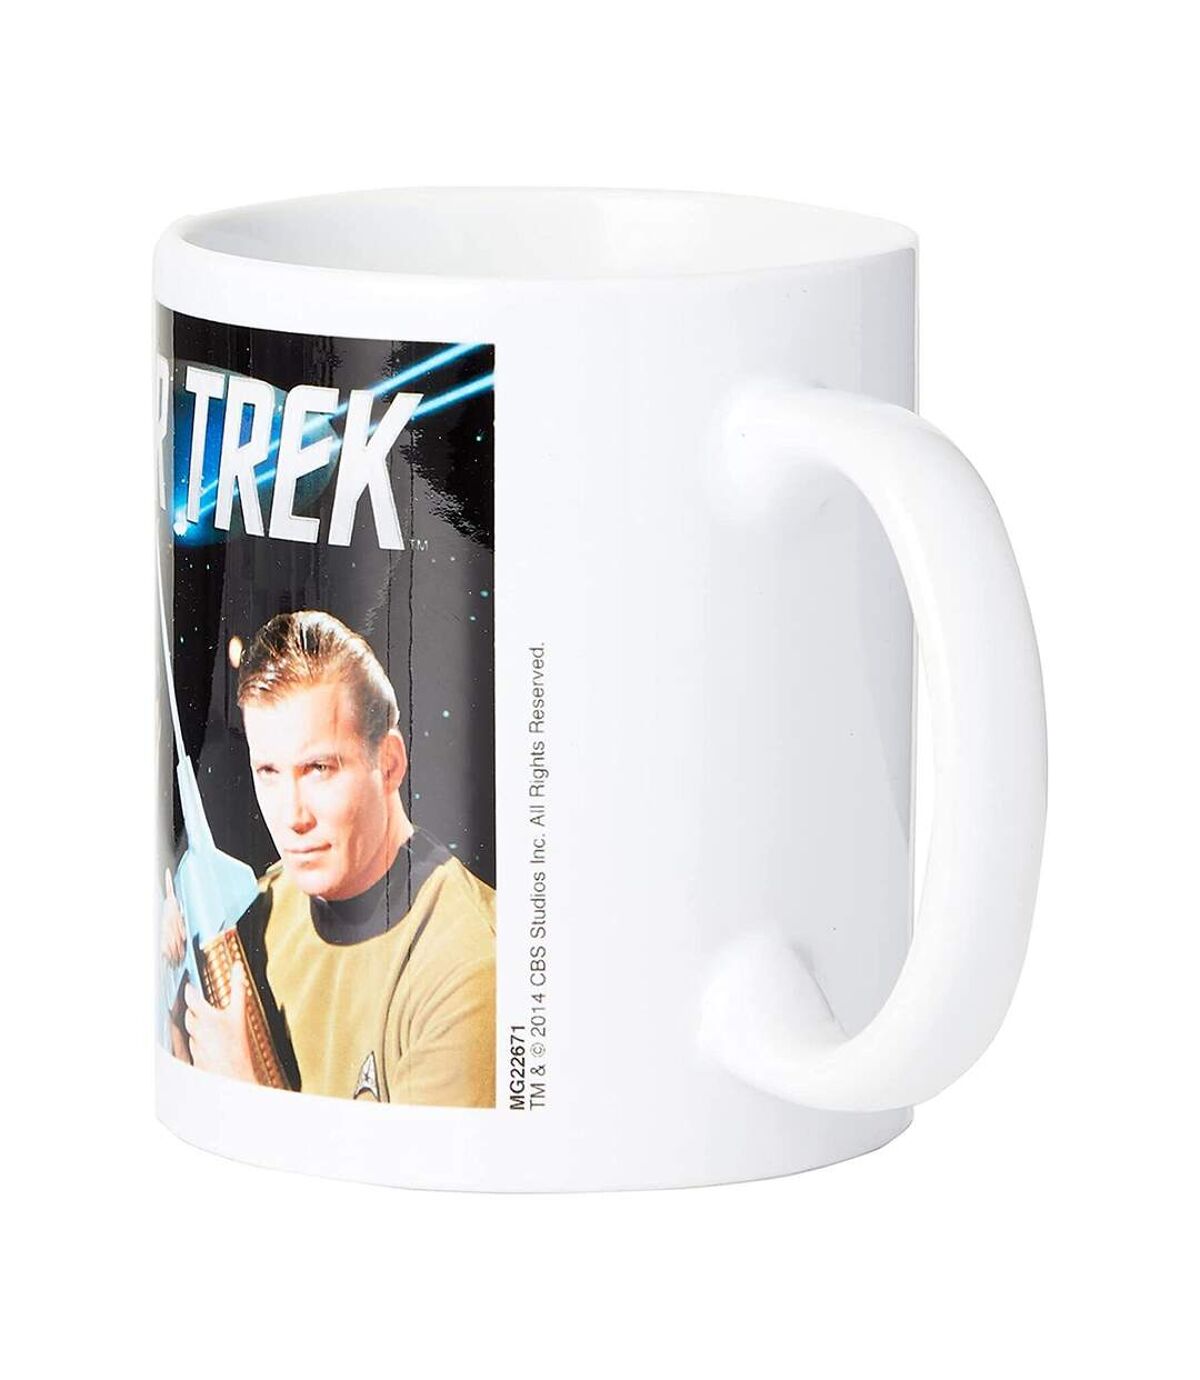 Star Trek Mug Kirk et Spok (Blanc/Noir) (Taille unique) - UTPM2087